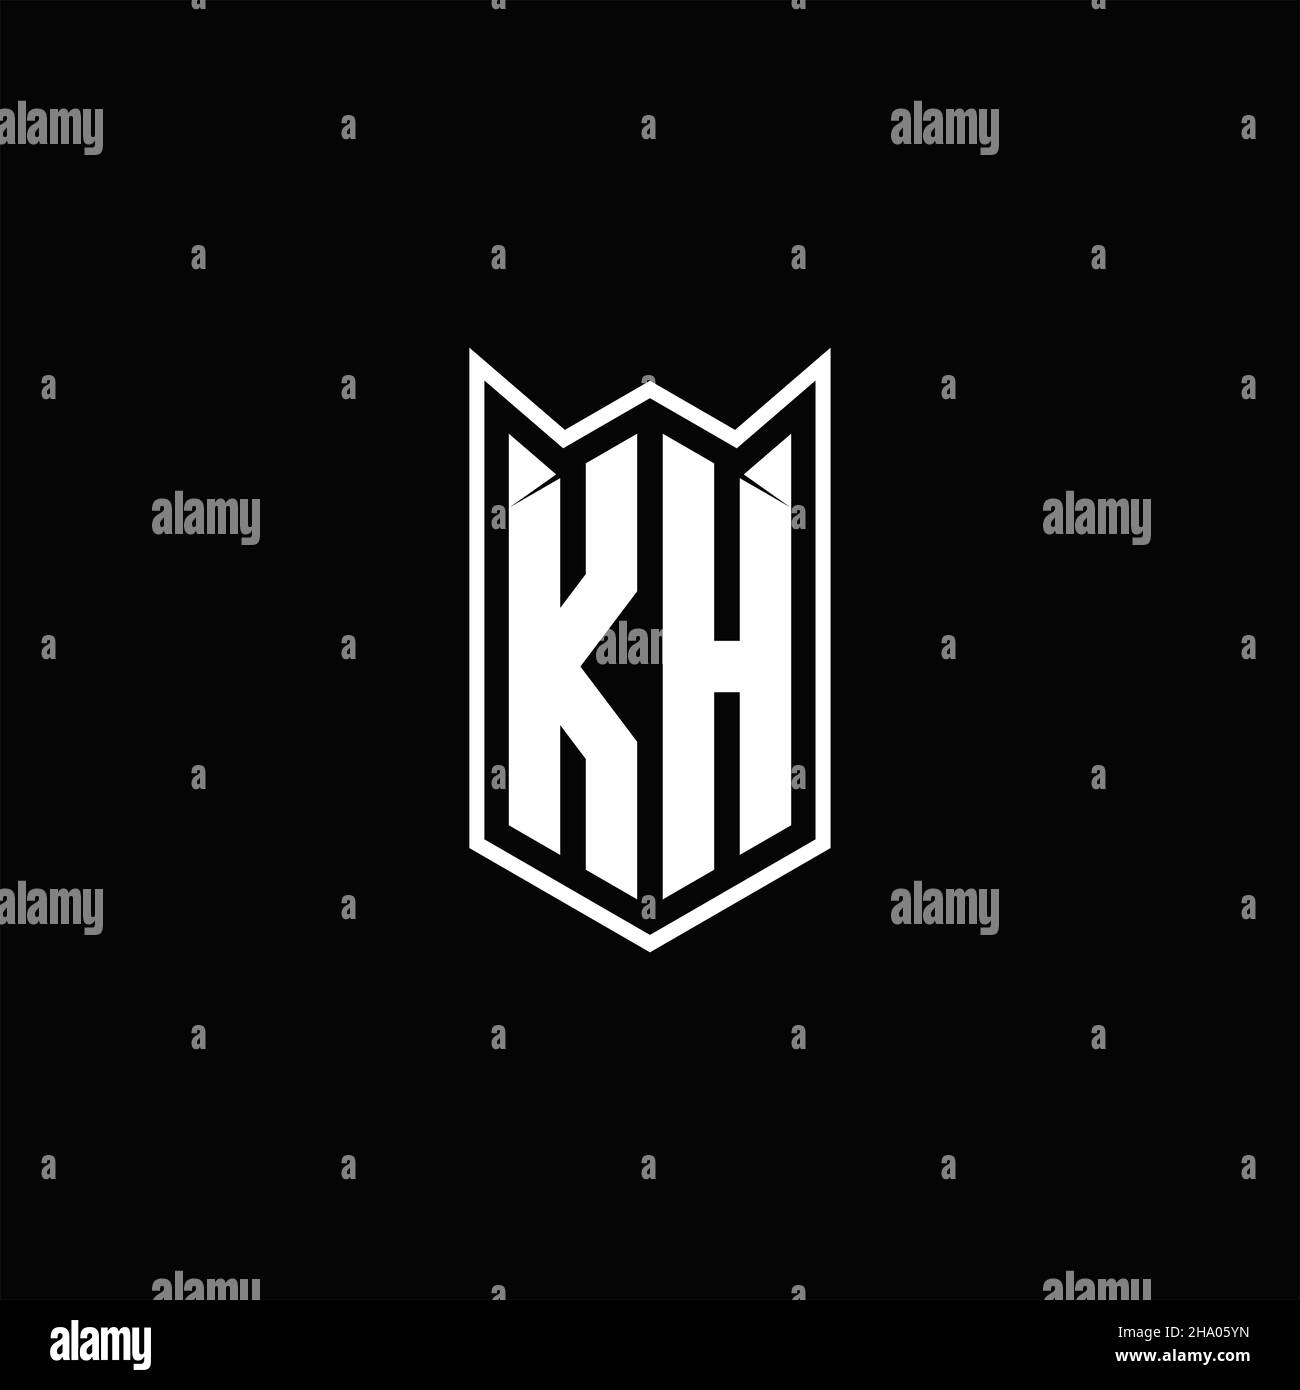 Kh logo Stock Vector Images - Alamy